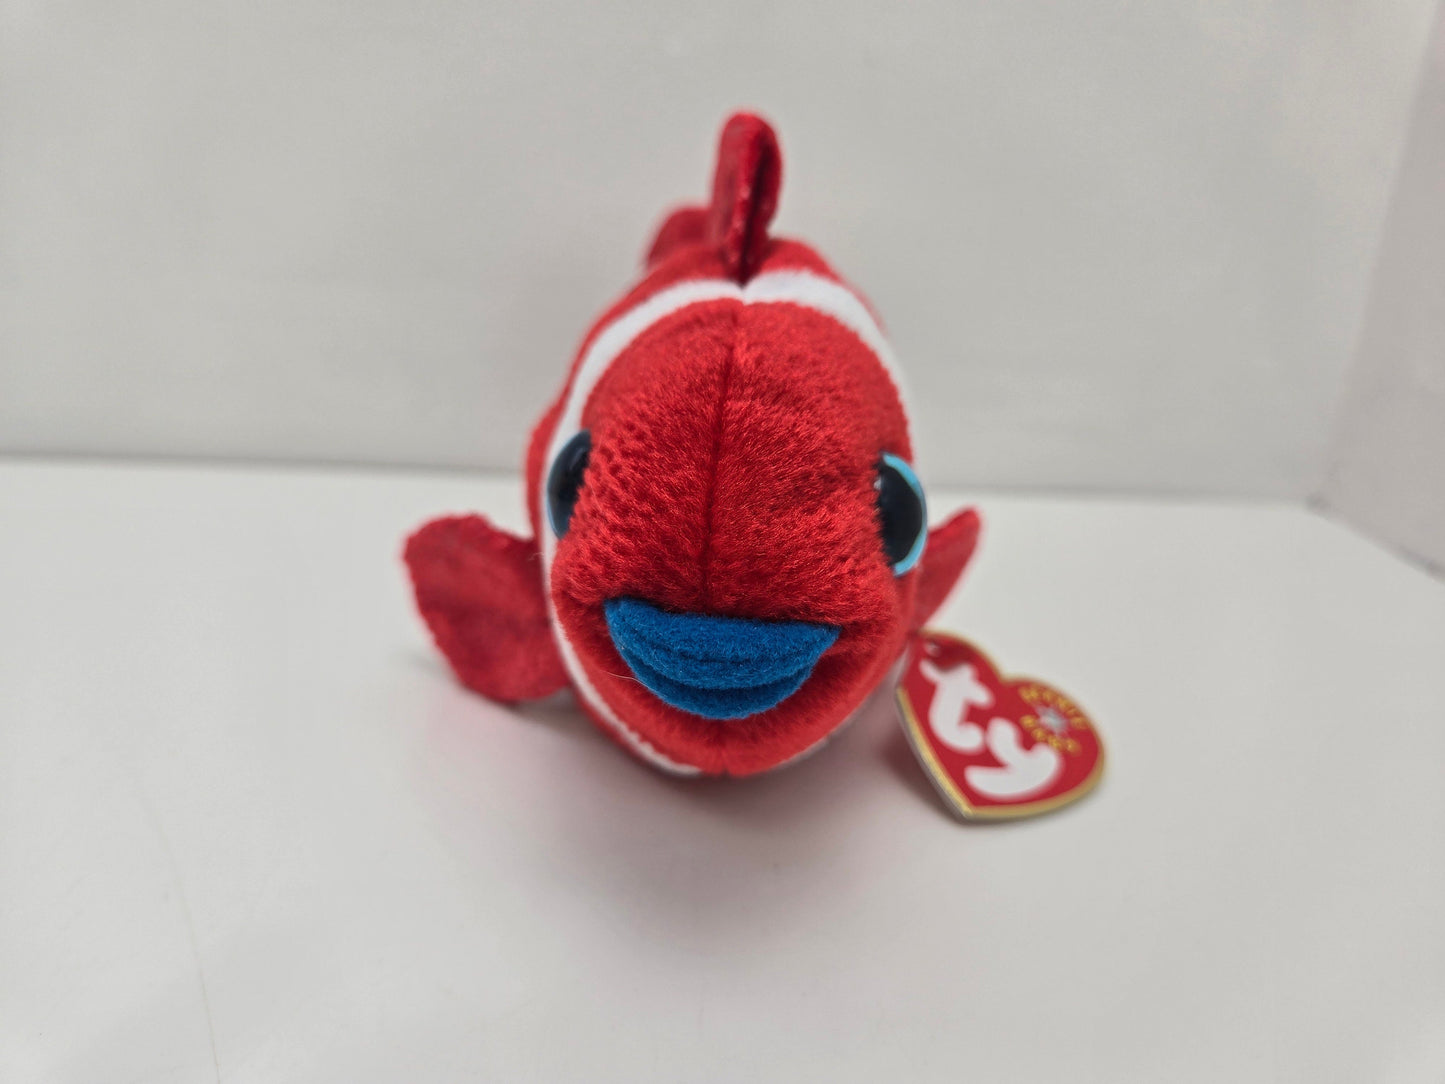 Ty Beanie Baby “Jester” the Clownfish! (8 inch)